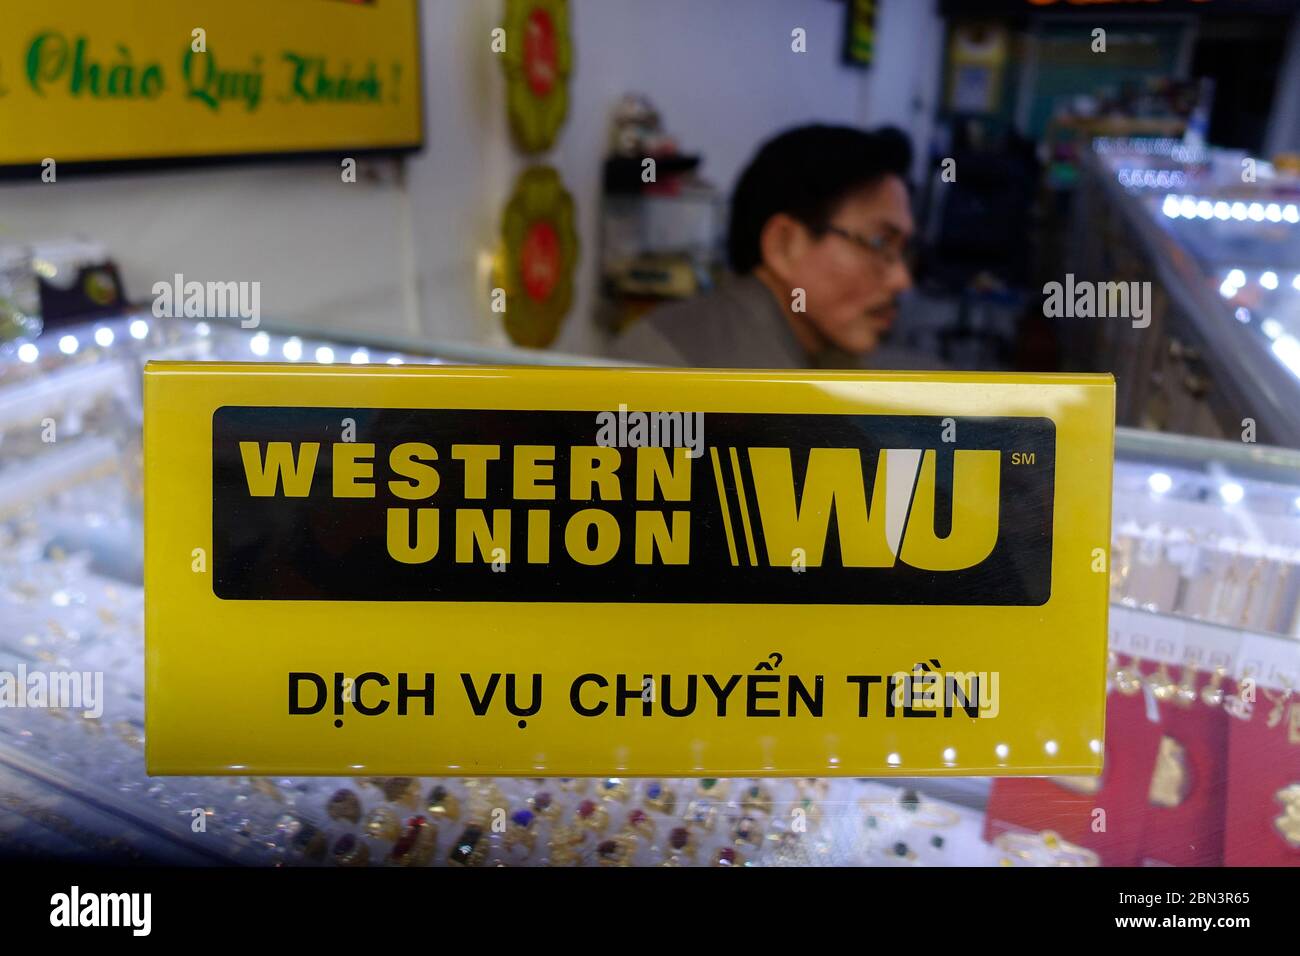 Western Union Bank Immagini E Fotos Stock Alamy